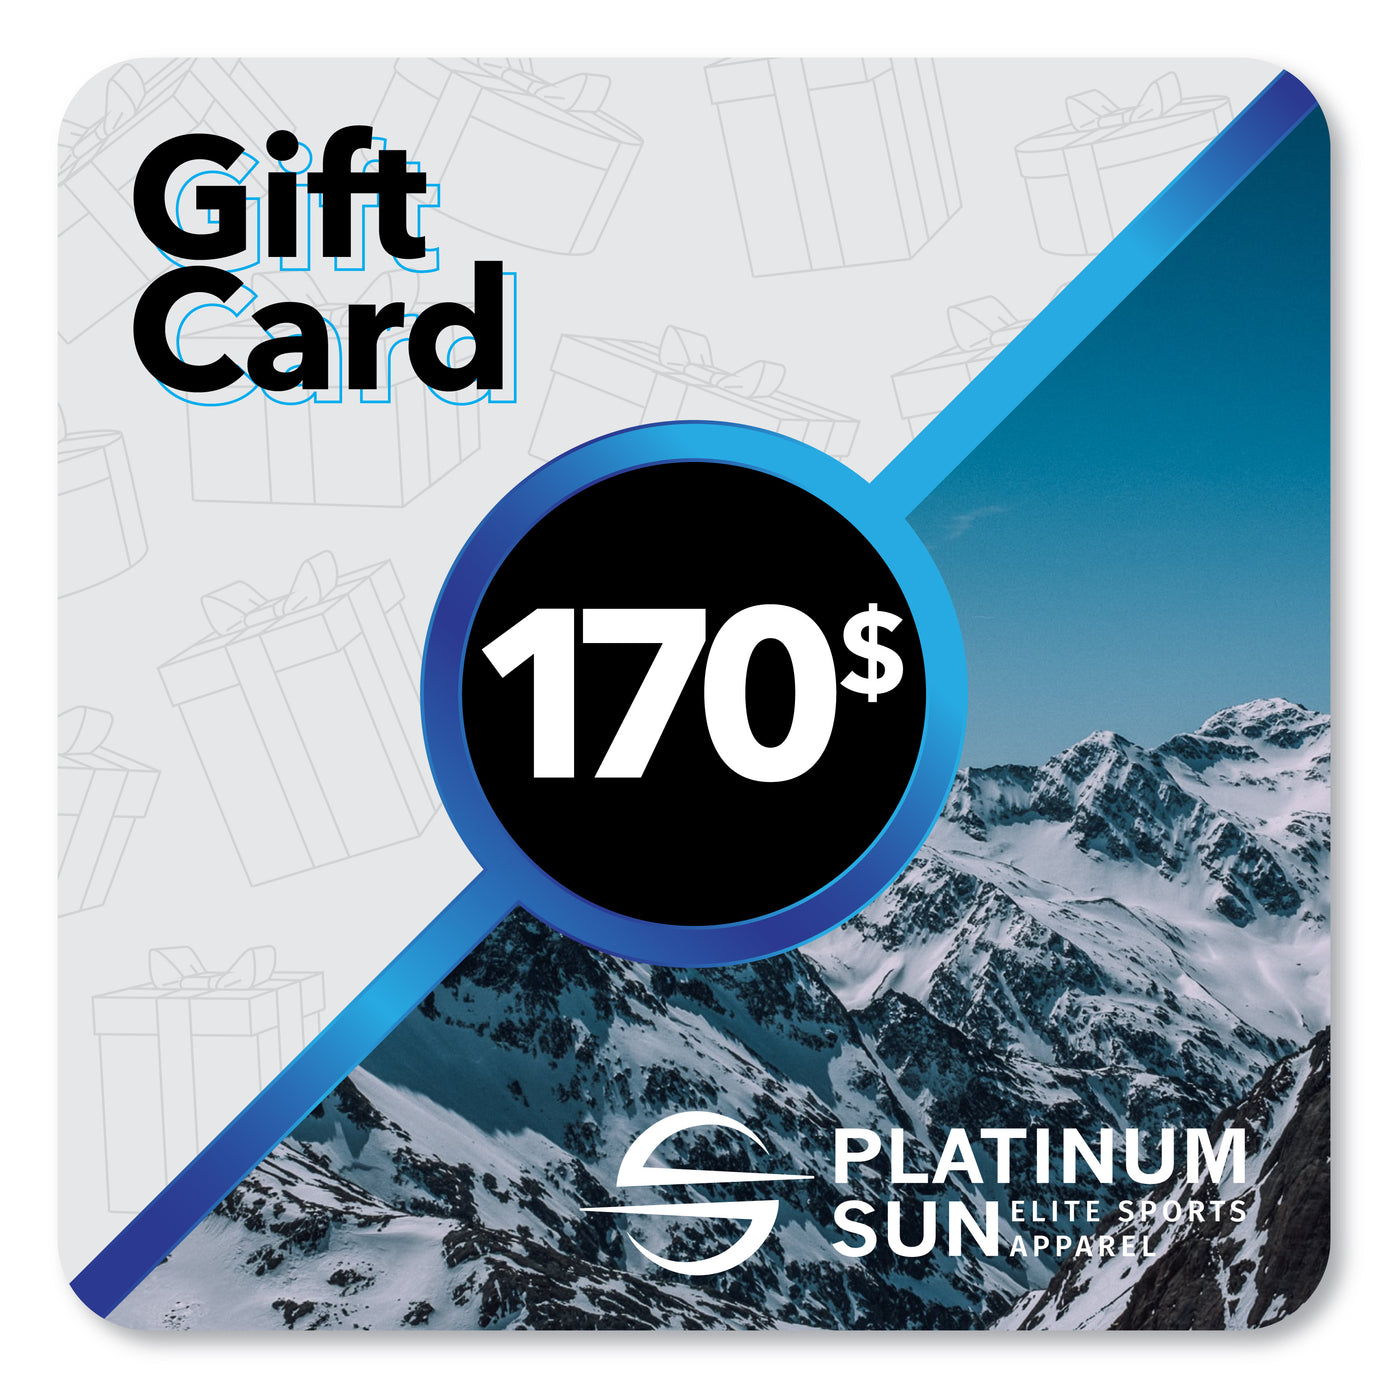 Platinum Sun Gift Card